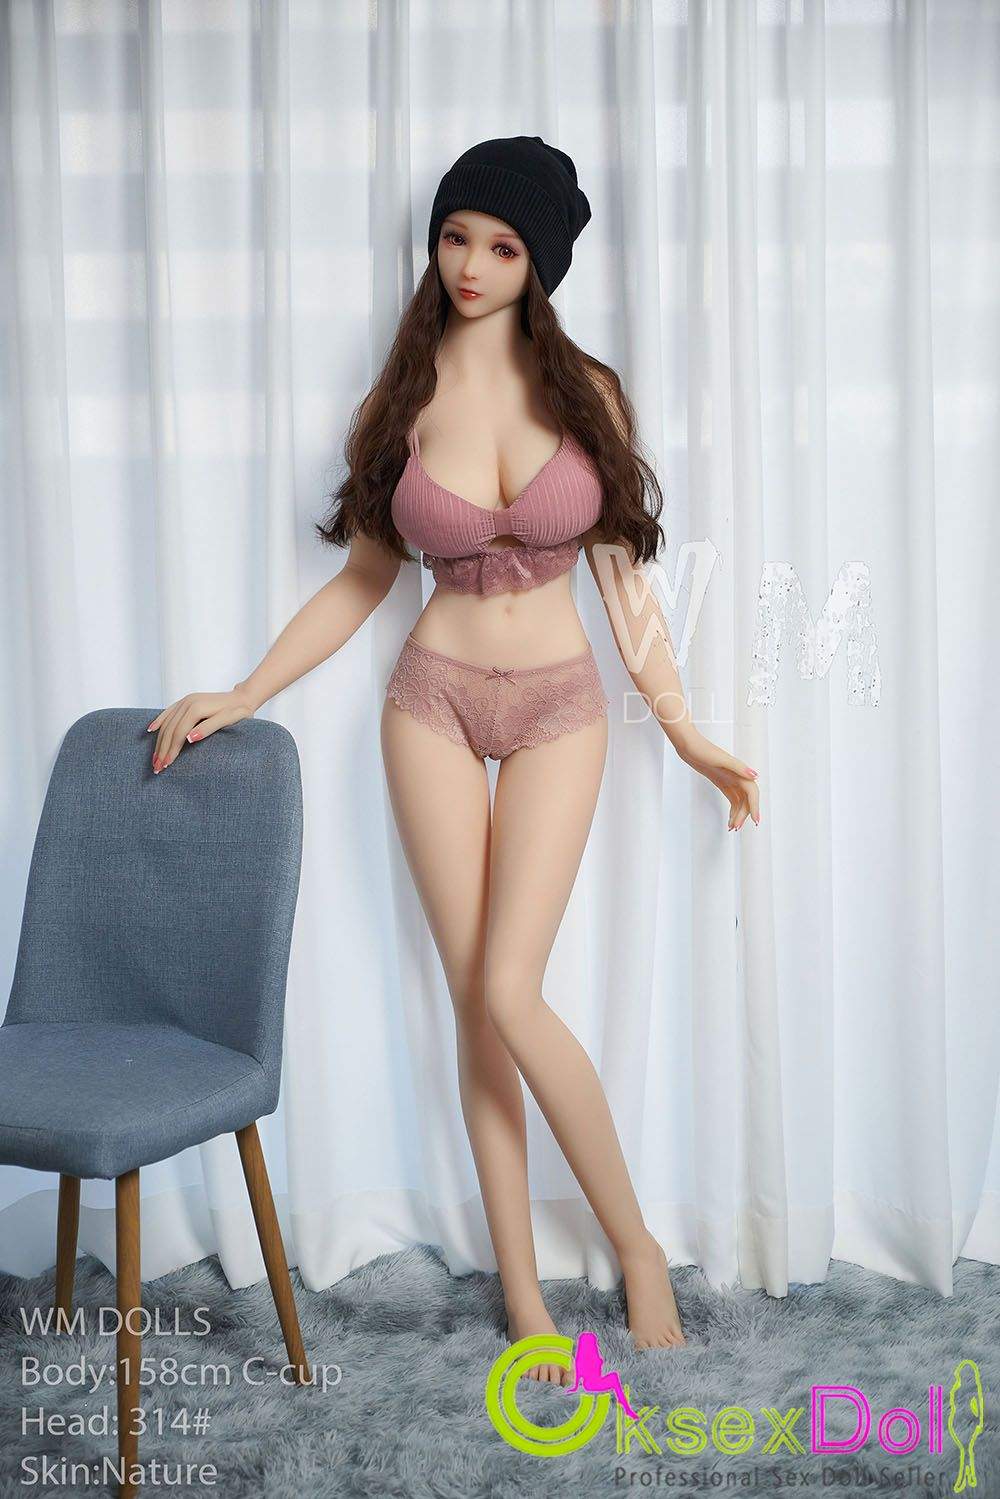 America Skinny Sex Doll